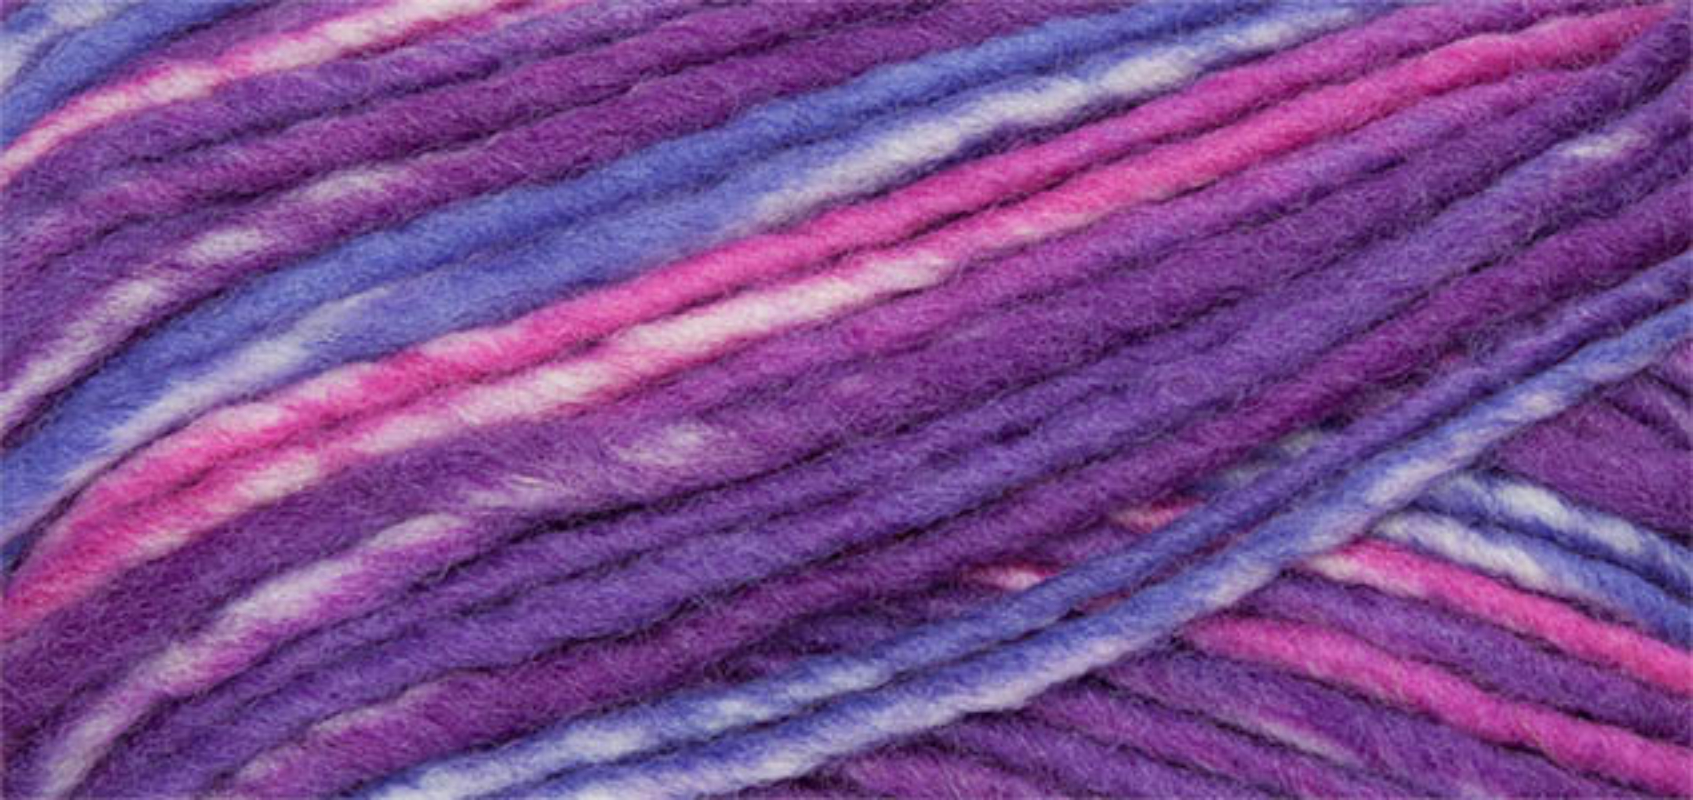 Filz Wolle Color Linie 231 von ONline 0130 - lila/rosa/pink